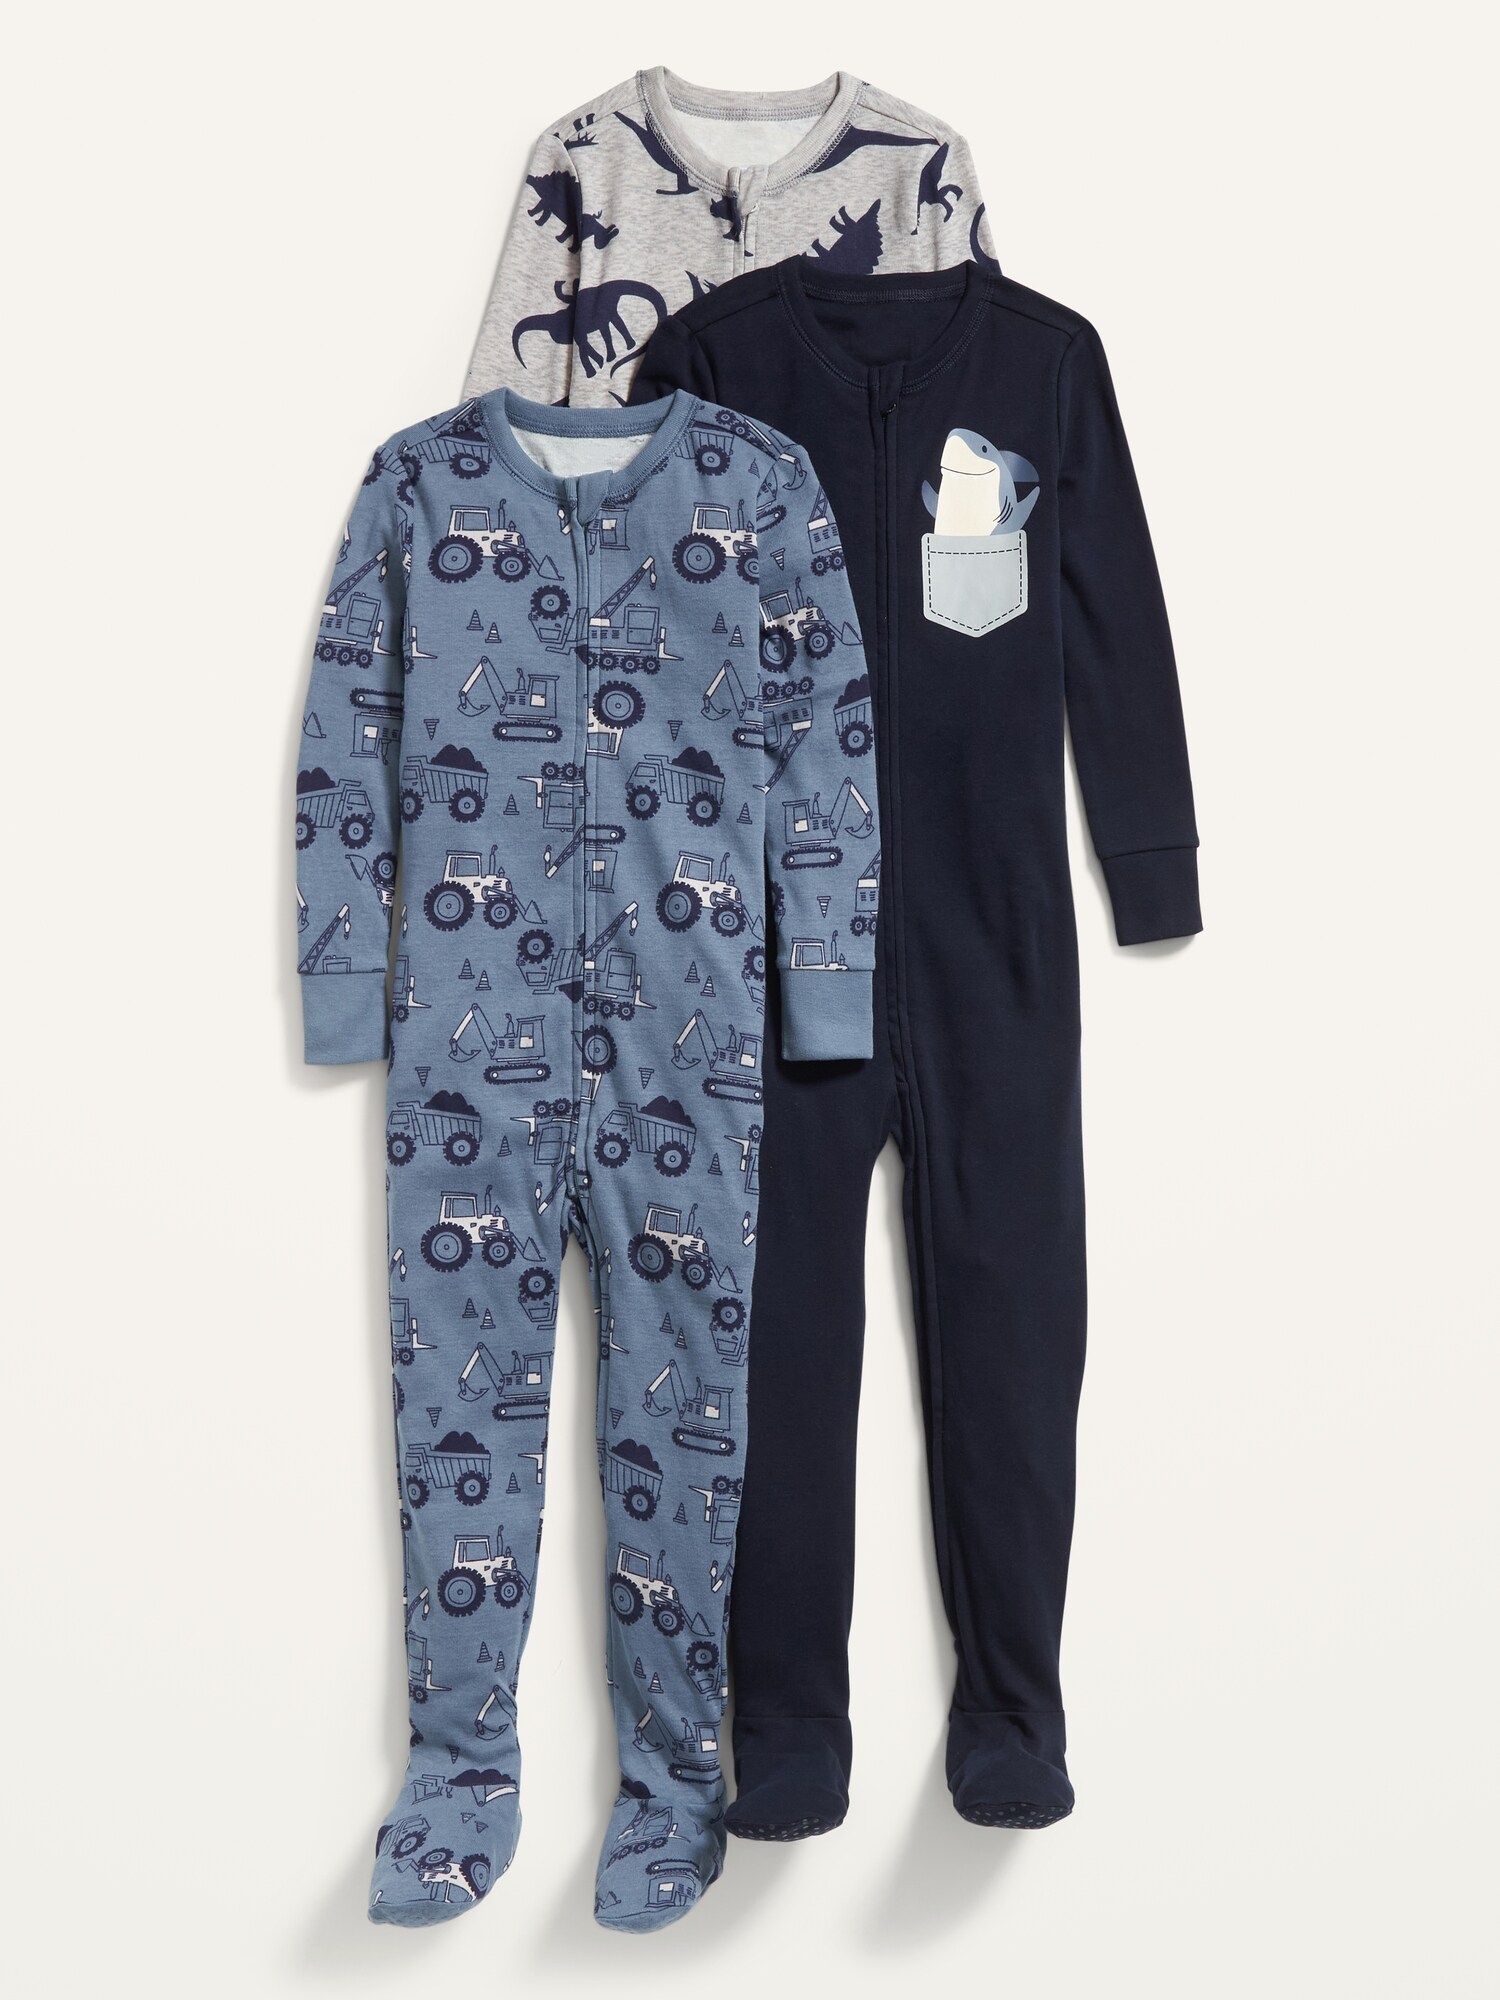 Unisex 2-Way-Zip Snug-Fit Footie One-Piece Pajamas 3-Pack for